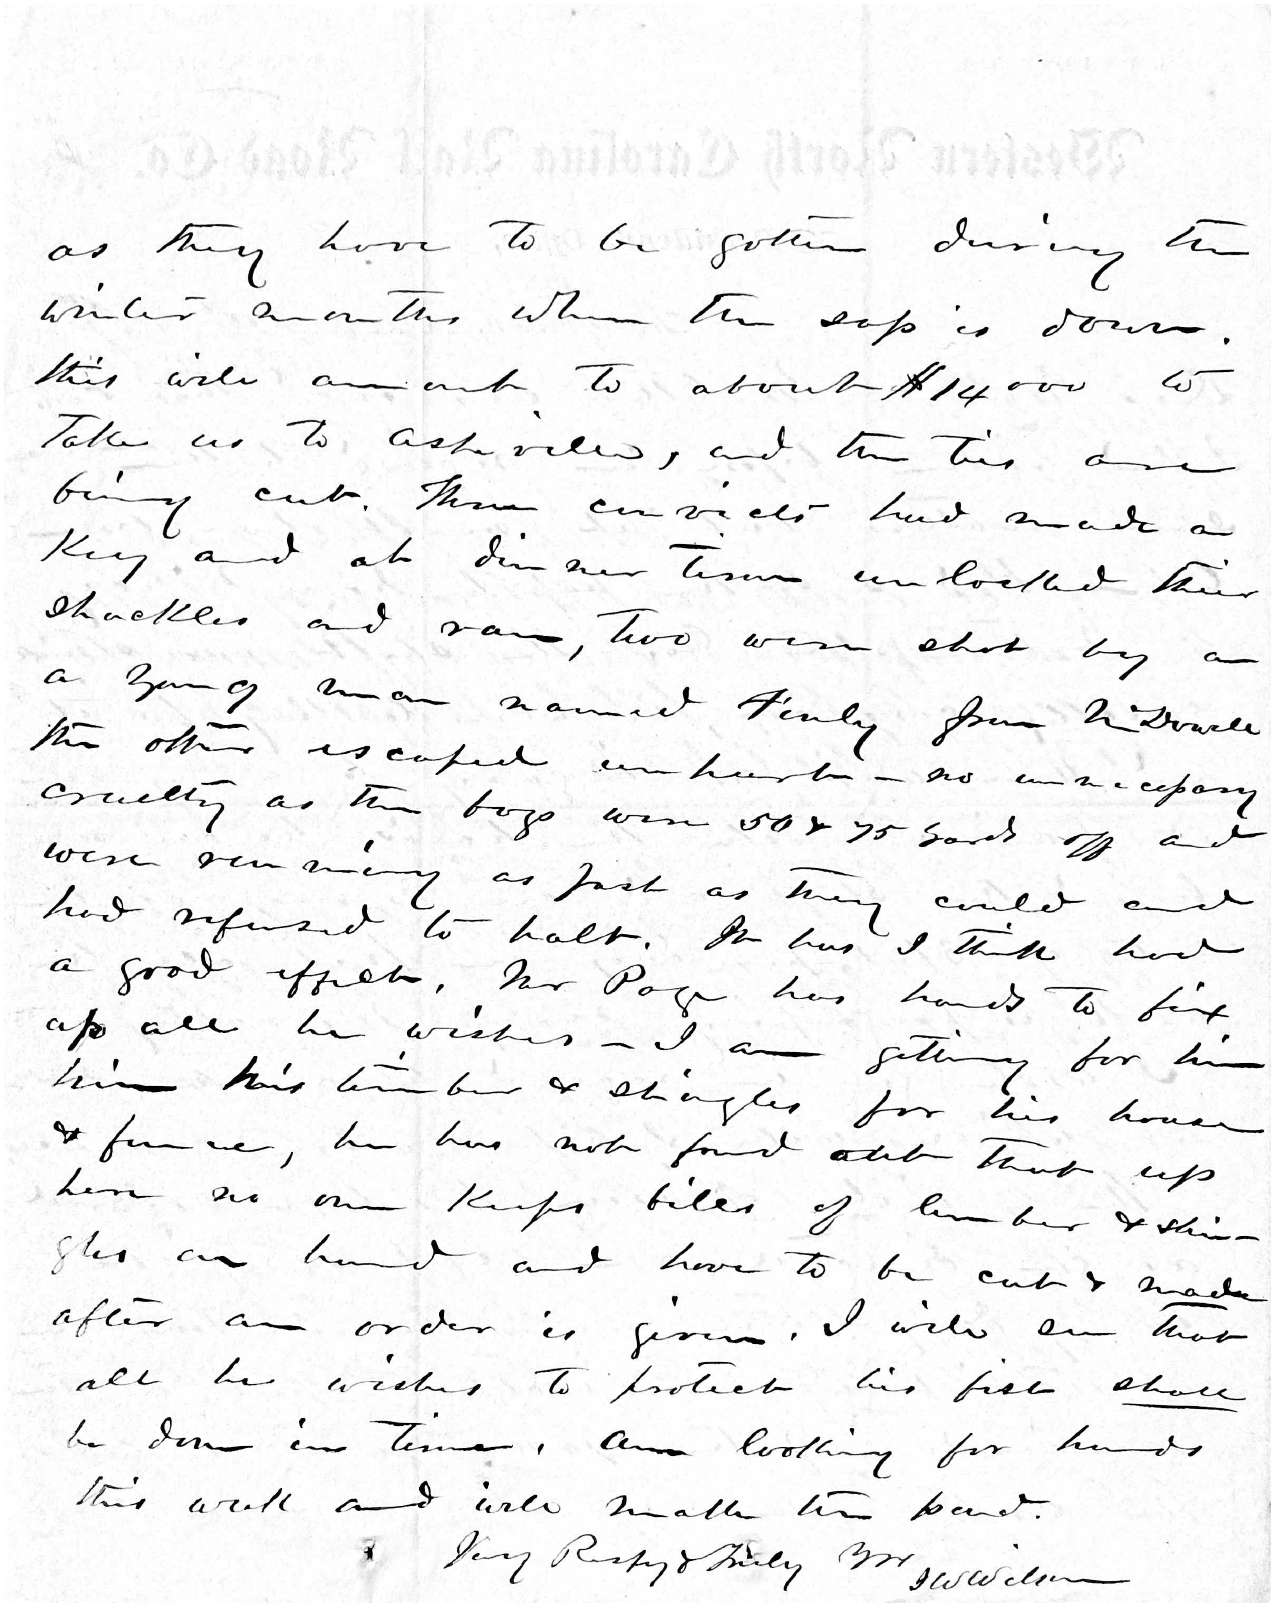 Jas. W. Wilson to ZBV November 21 1877 2